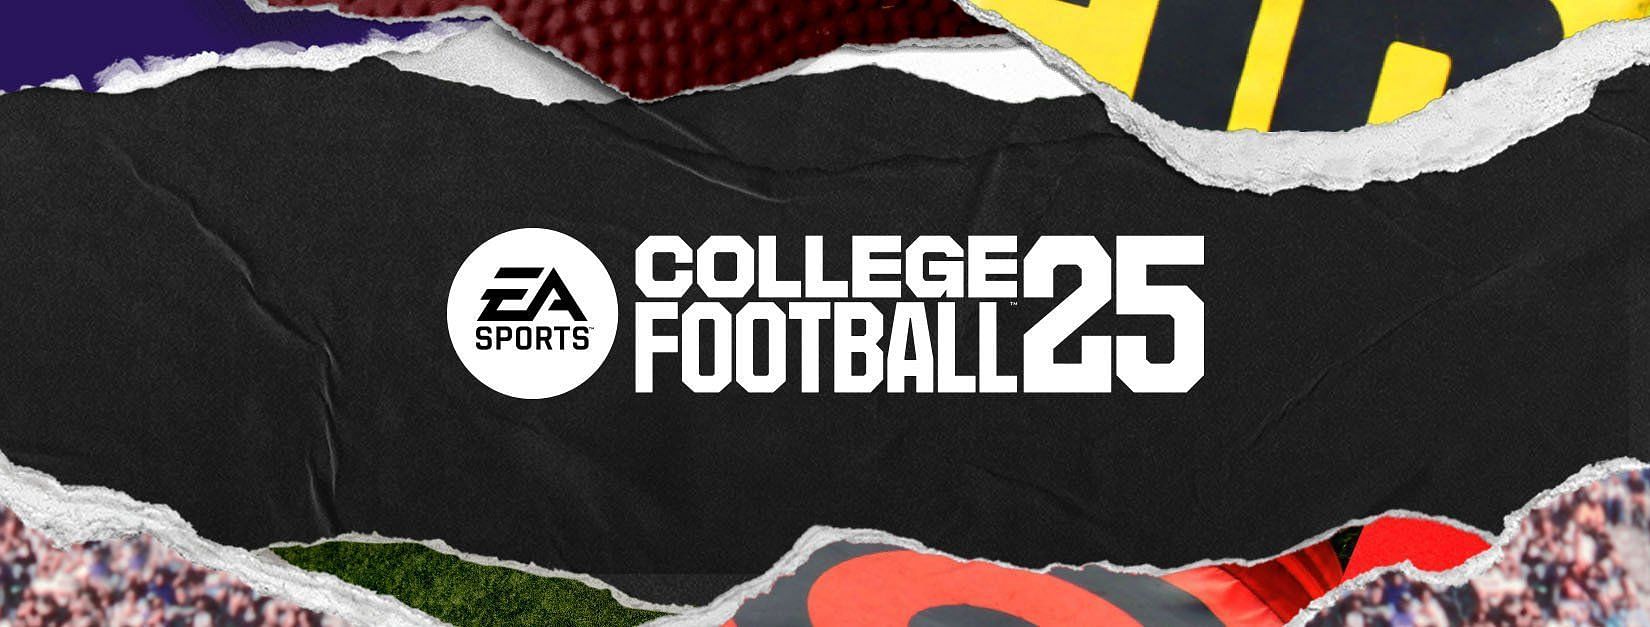 EA Sports College Football 25 Cover 